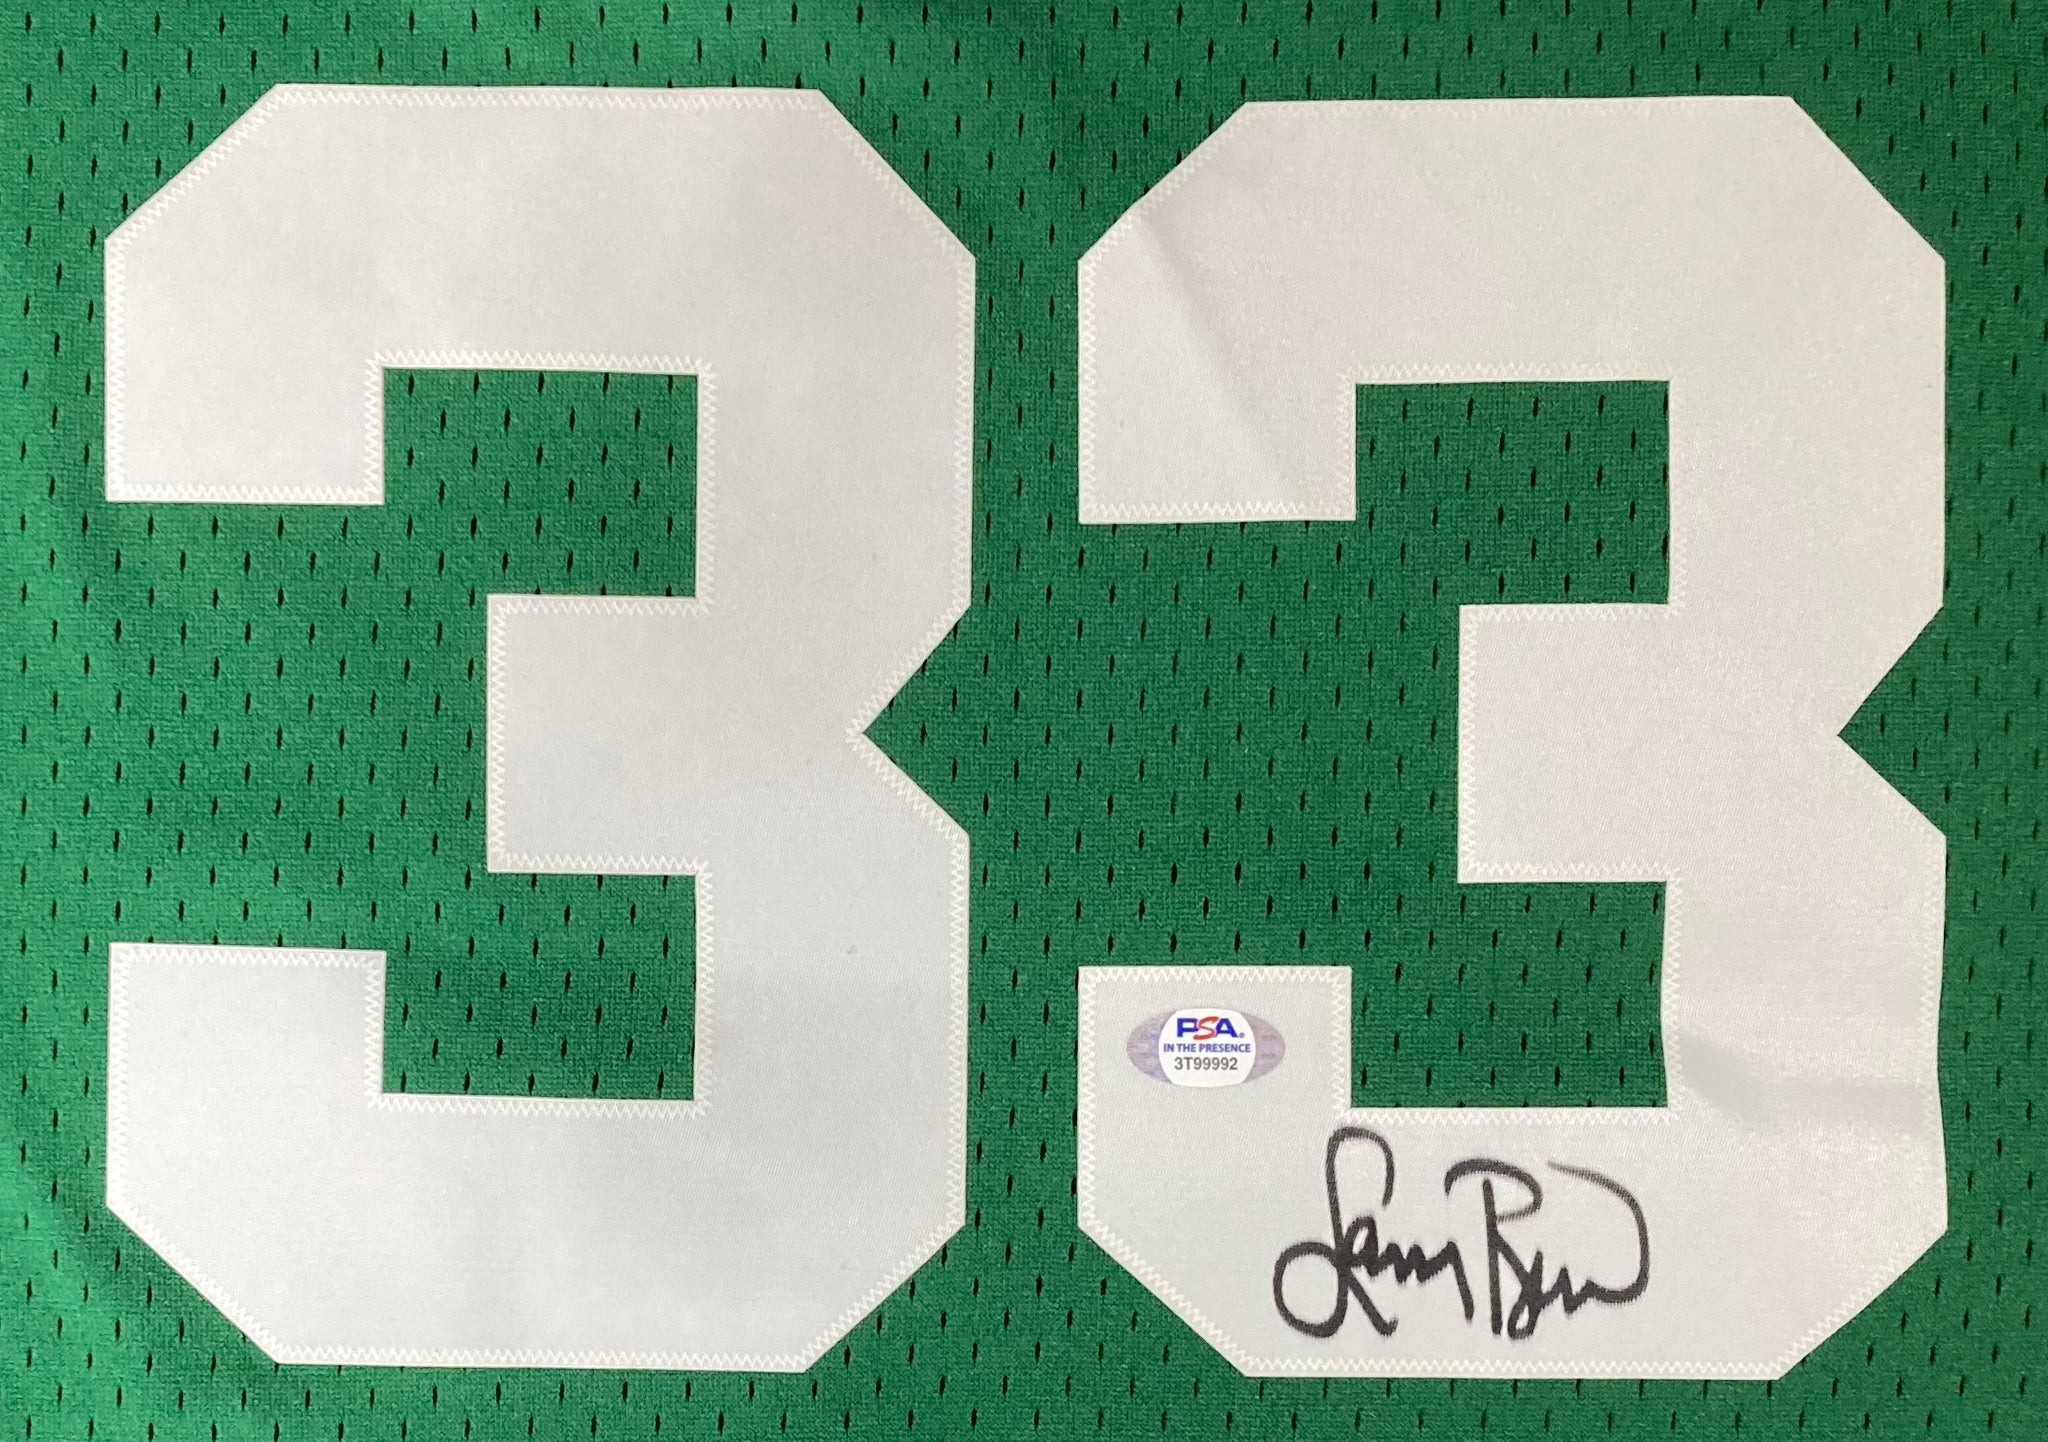 Larry Bird Autographed Boston Celtics Mitchell and Ness Basketball Jersey XL - PSA